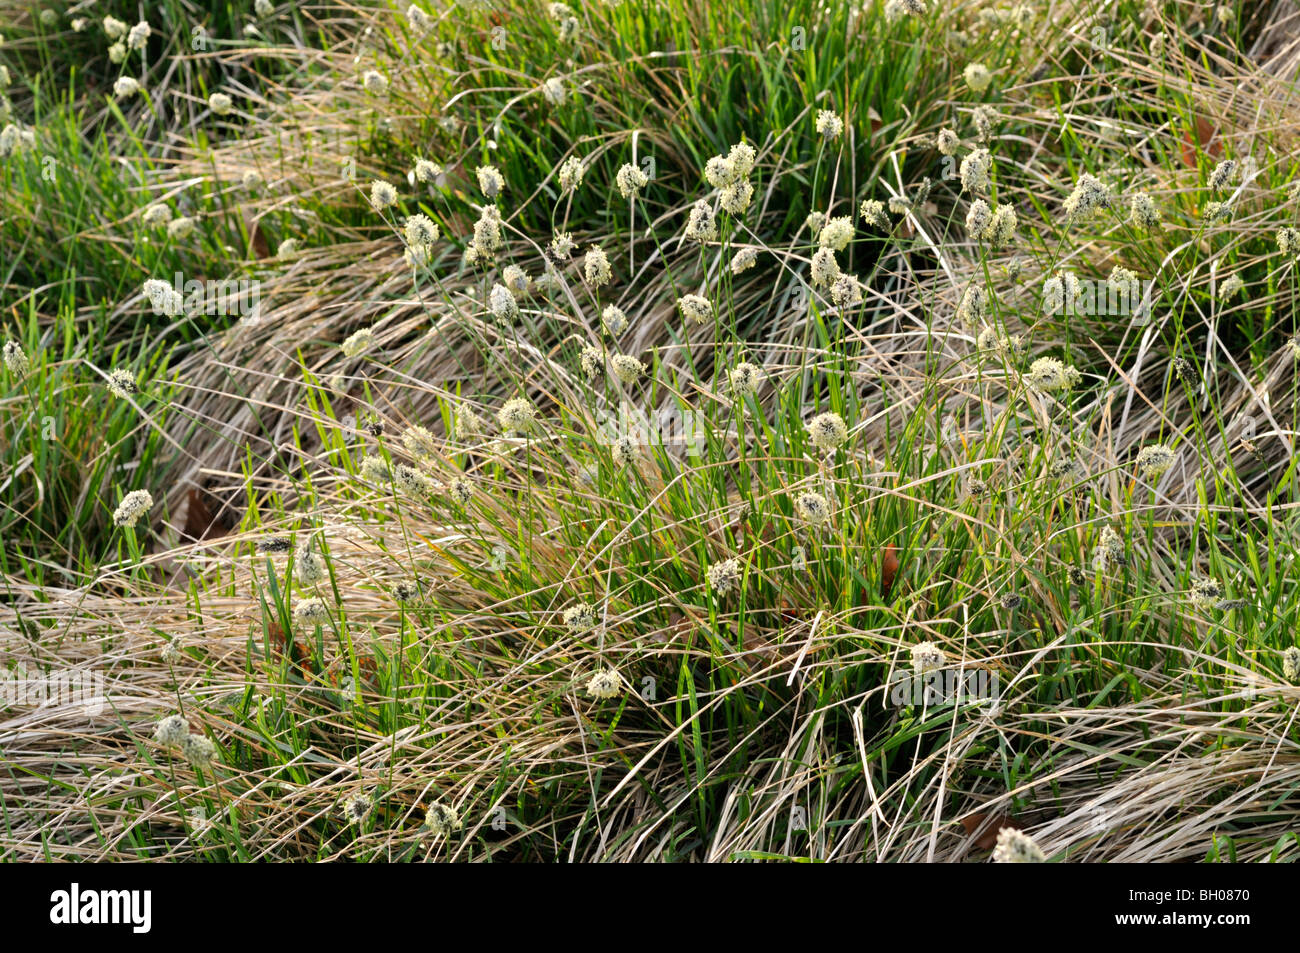 Balkan blue grass (Sesleria heufleriana) Stock Photo